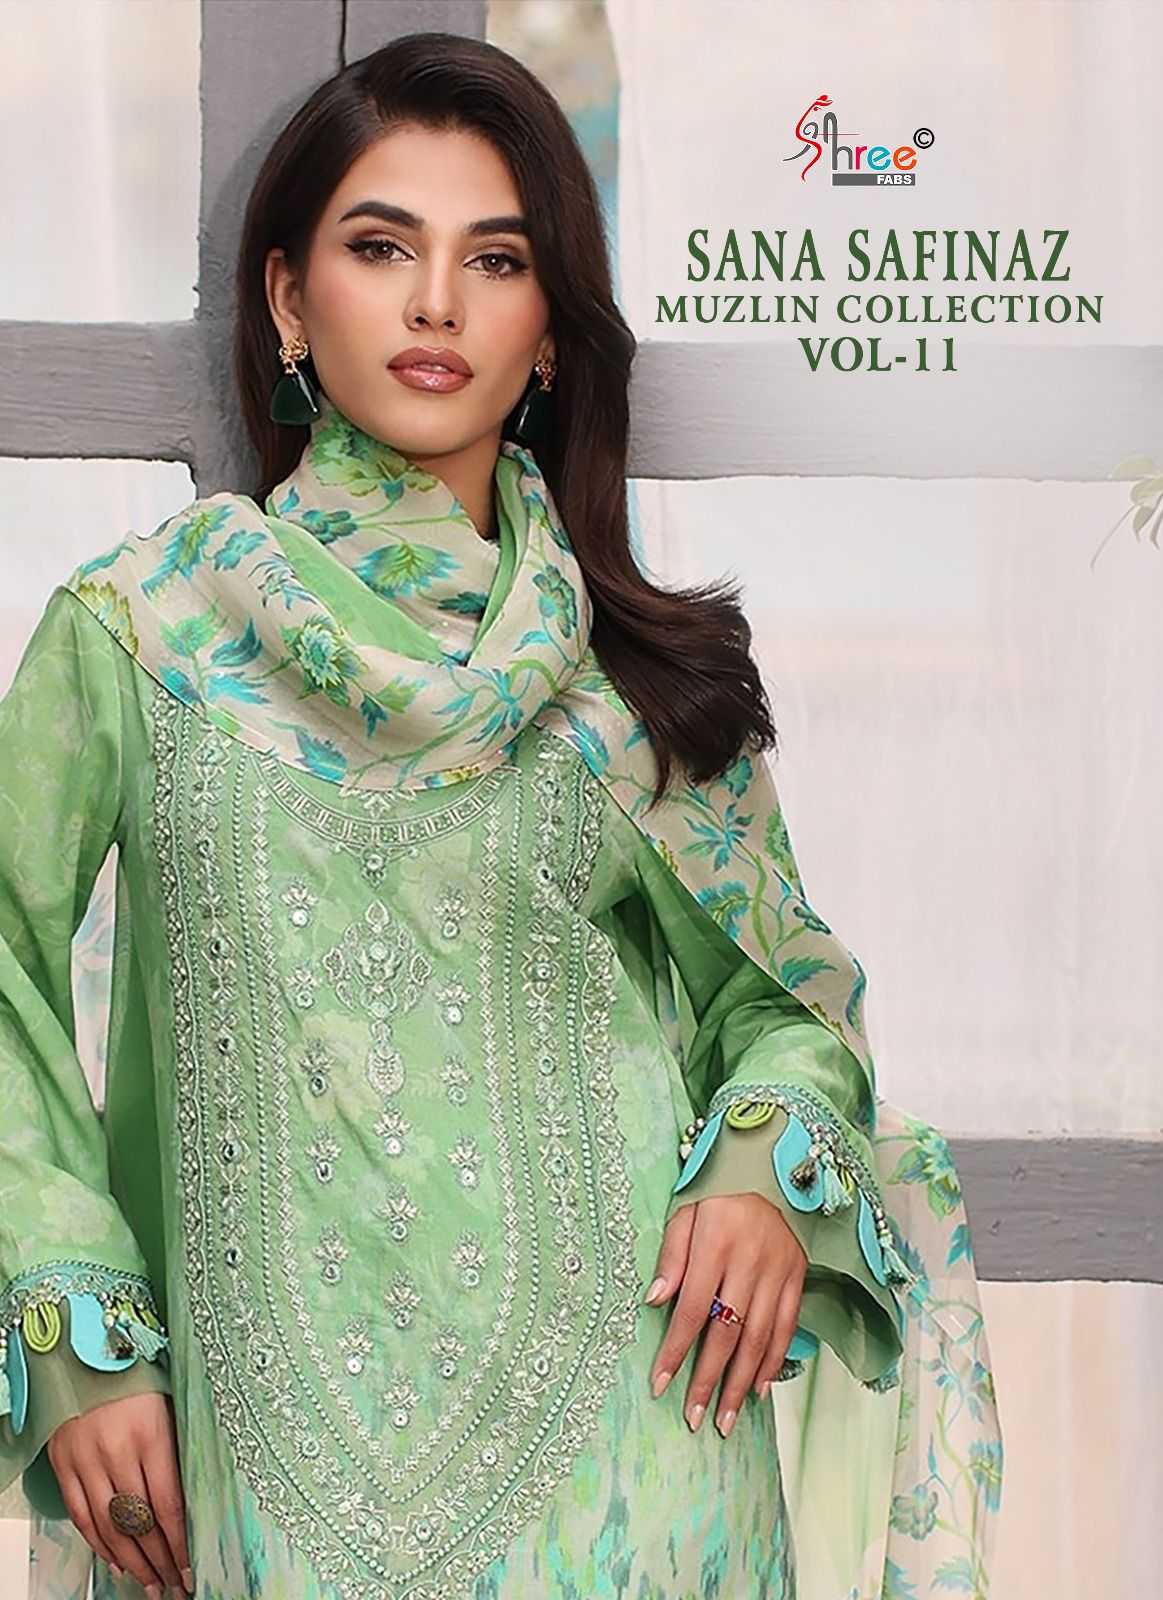 shree fabs sana safinaz muzlin collection vol 11 launch festival look pakistani salwar suit